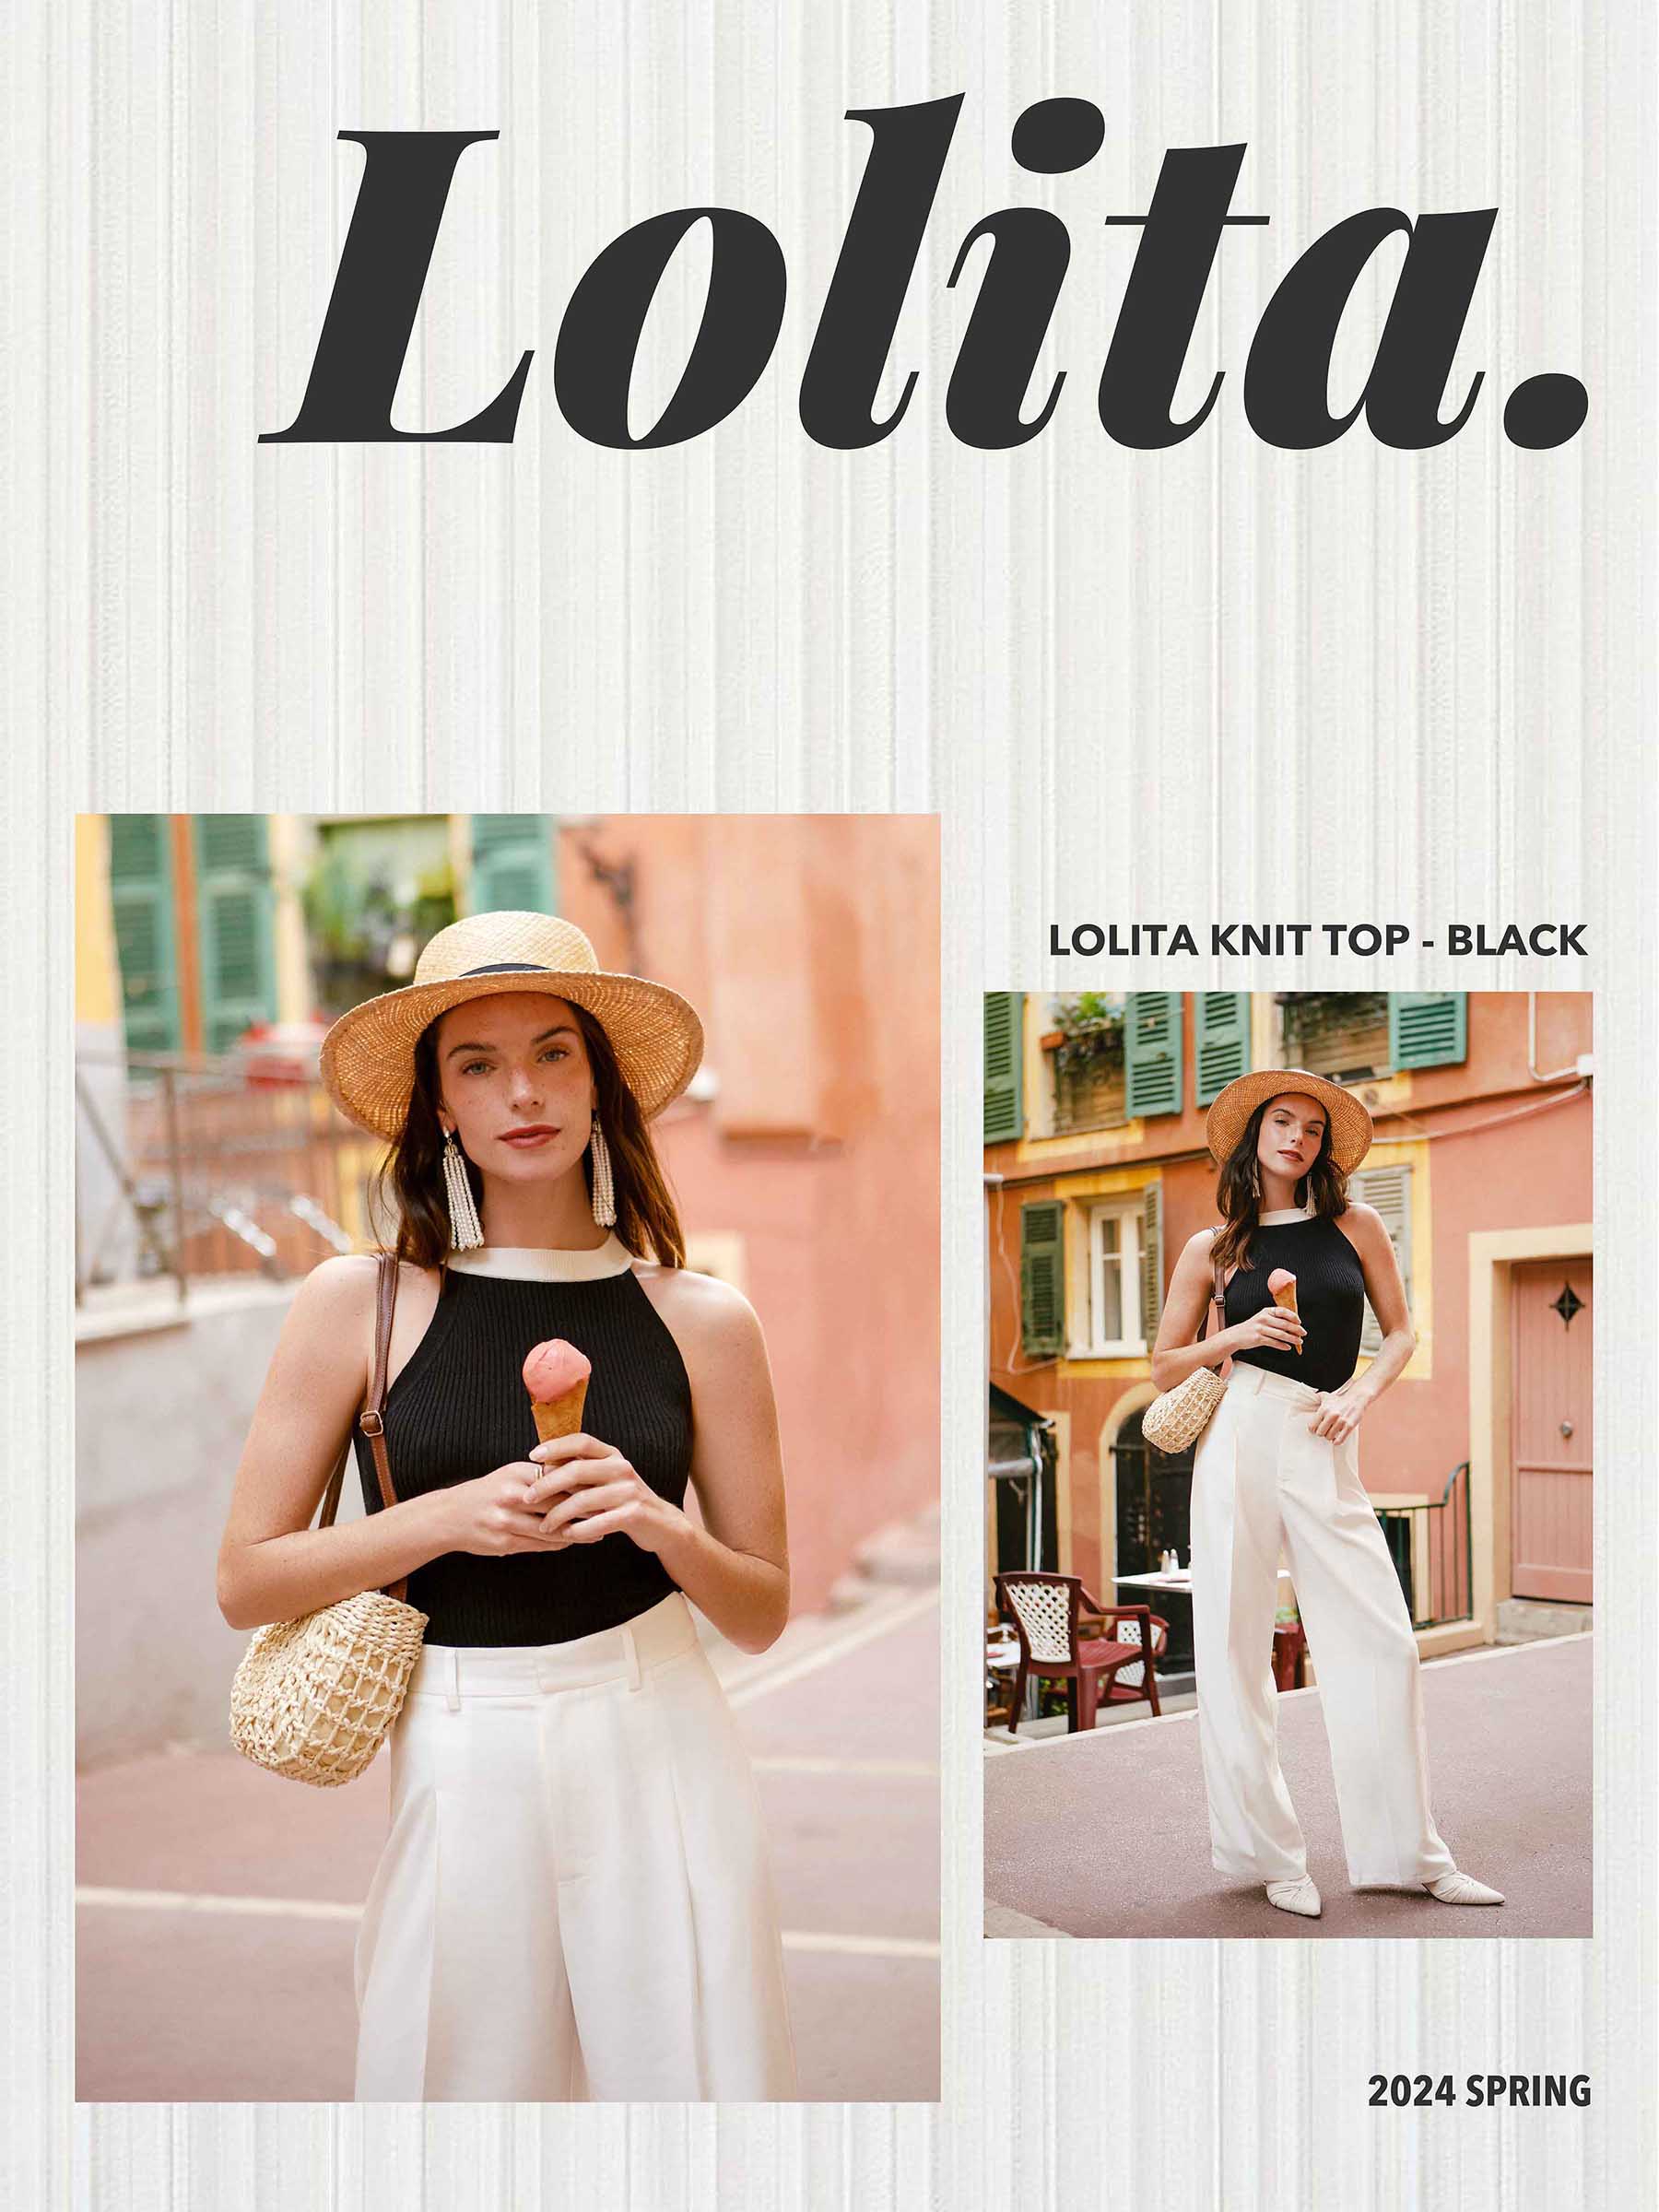 Petite Studio's Lolita Knit Top - Black Spring '24